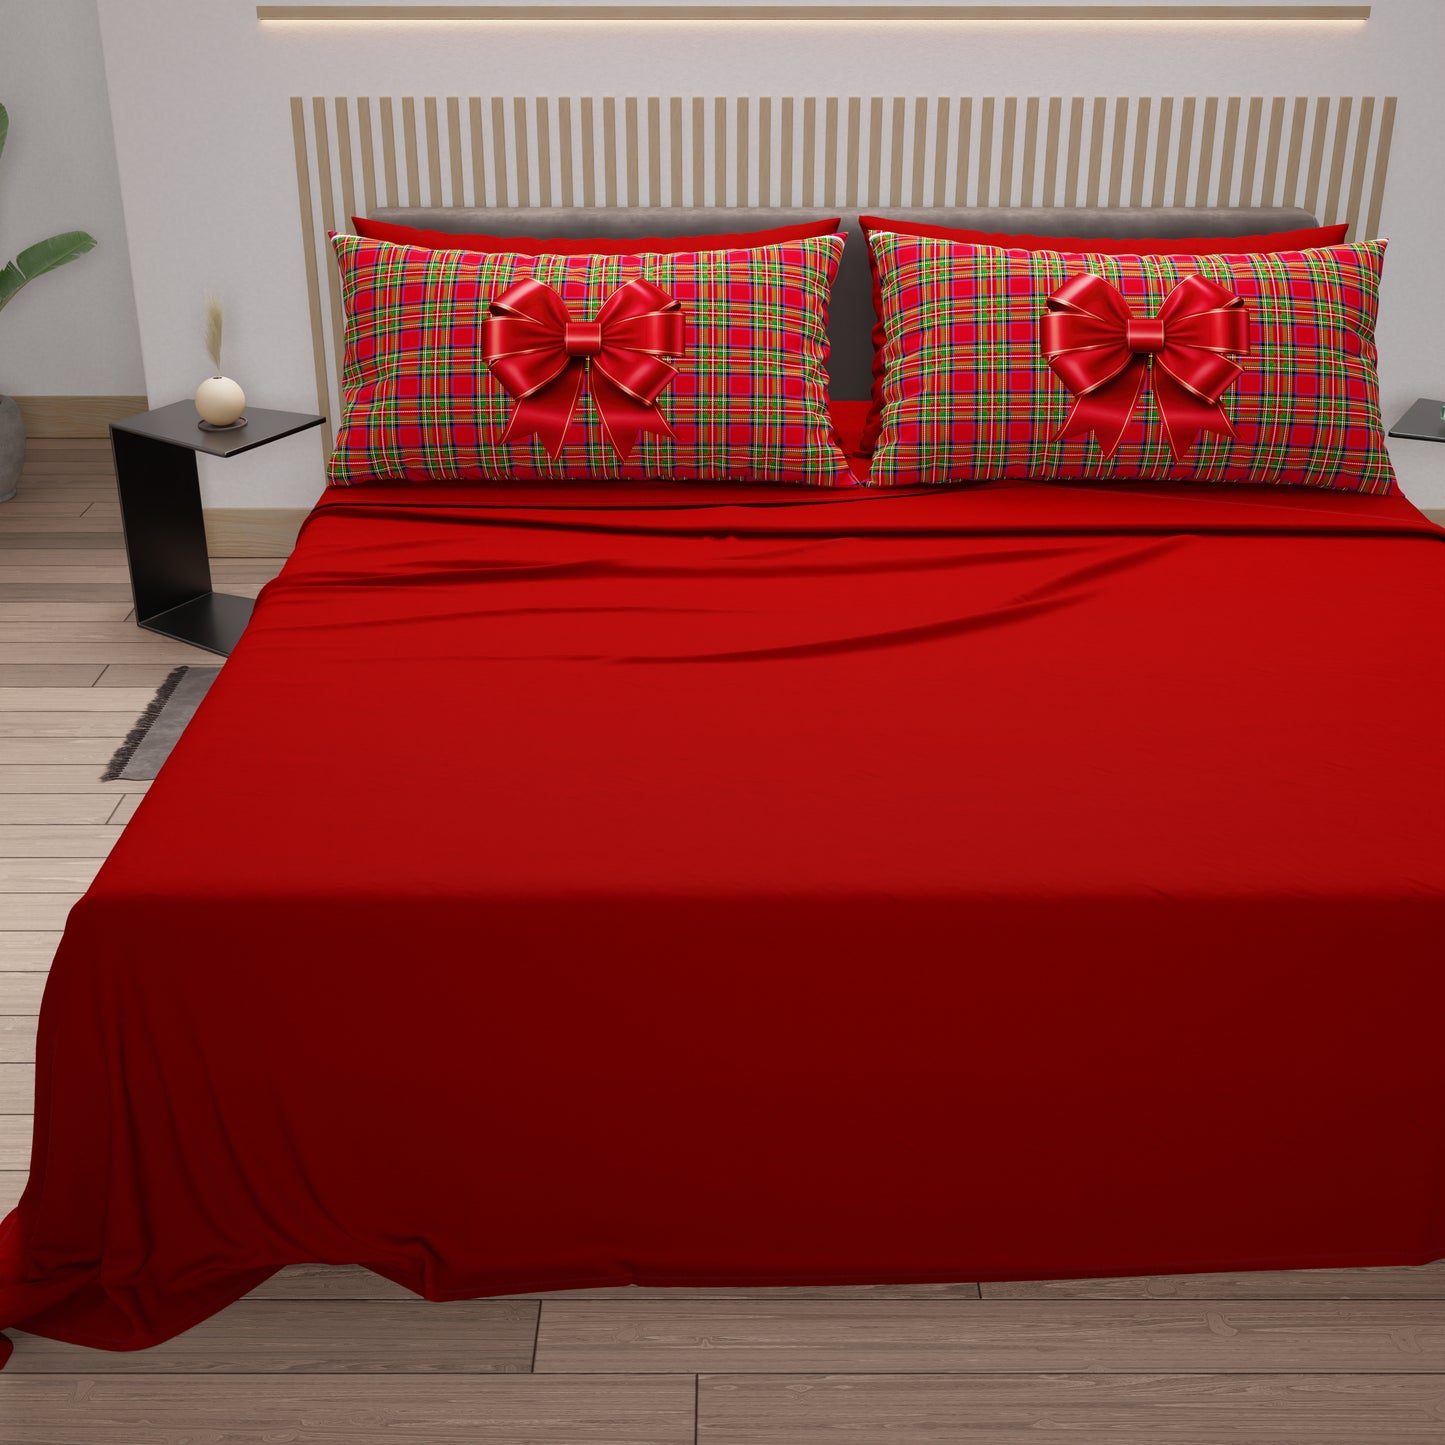 Cotton sheets, bed set with tartan bow digital print pillowcases